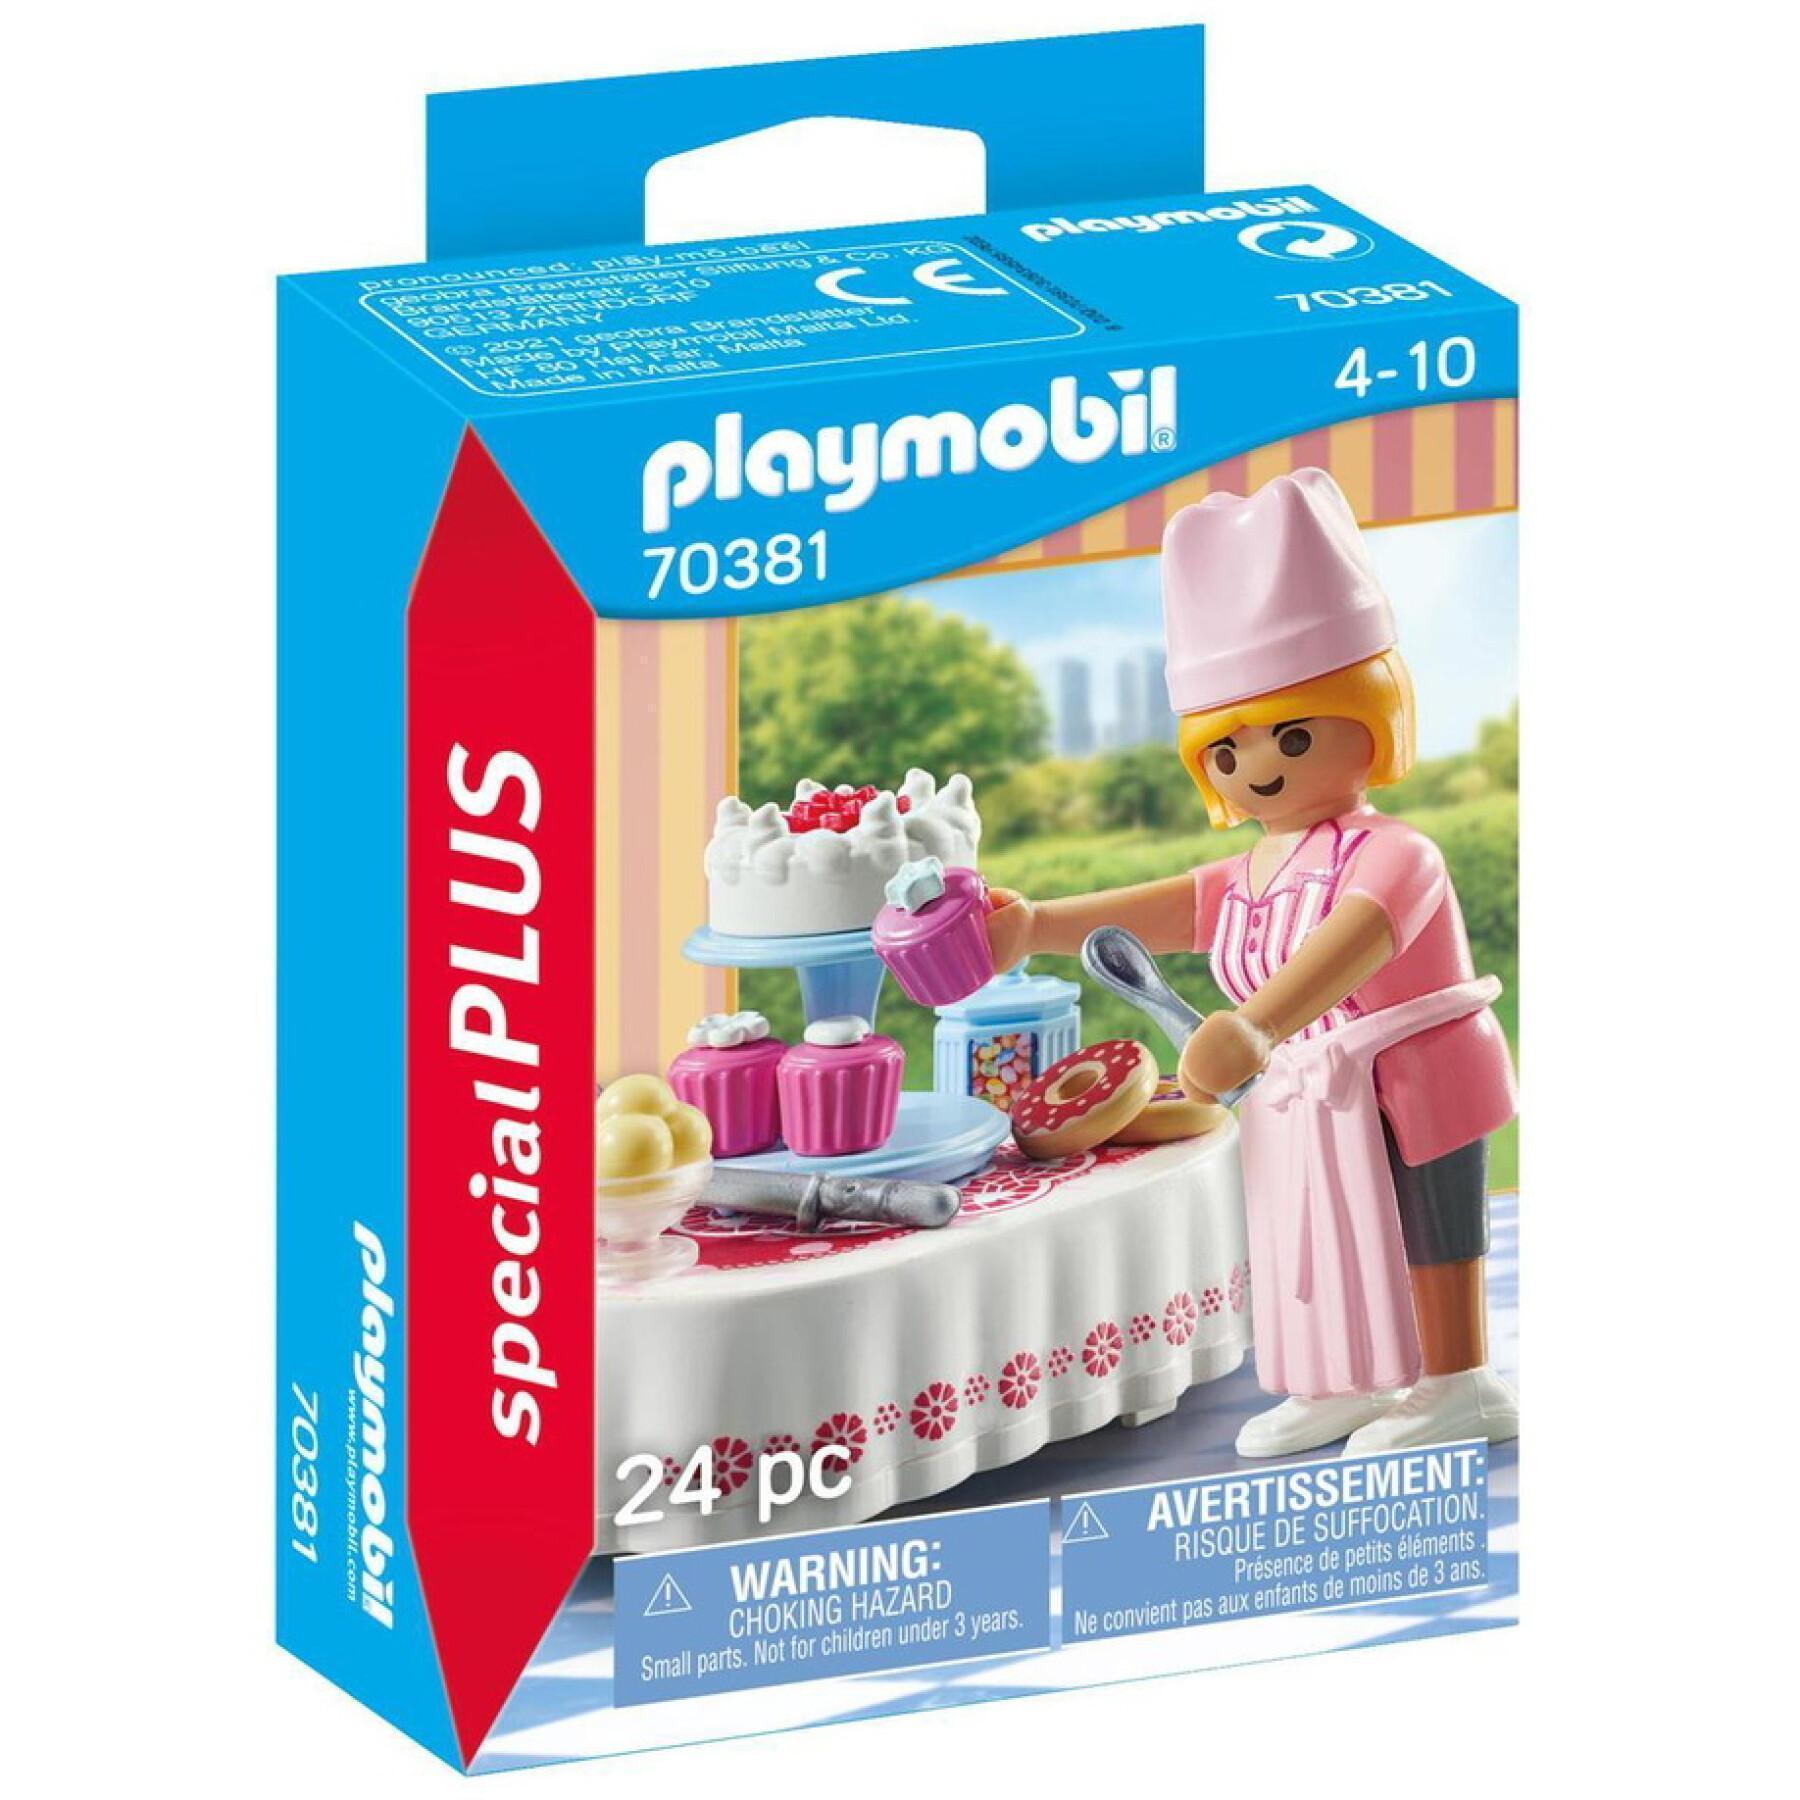 Patisserie Playmobil